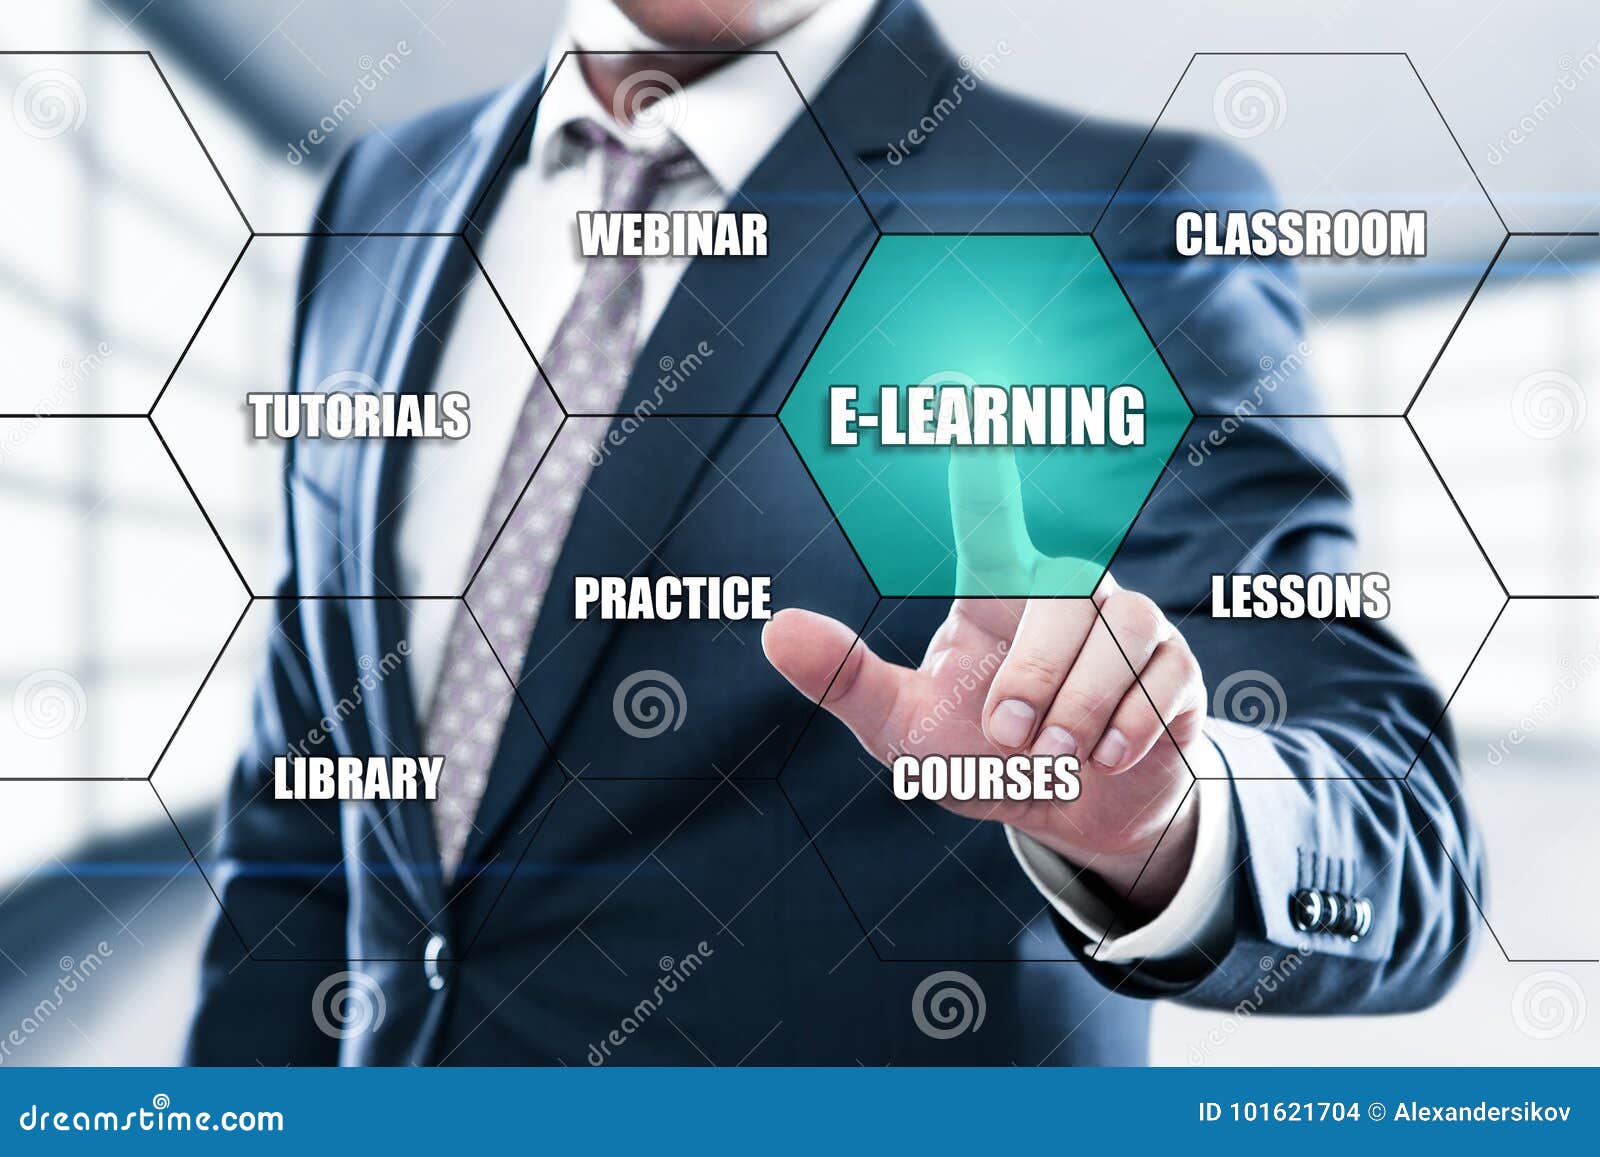 e-learning education internet technology webinar online courses concept